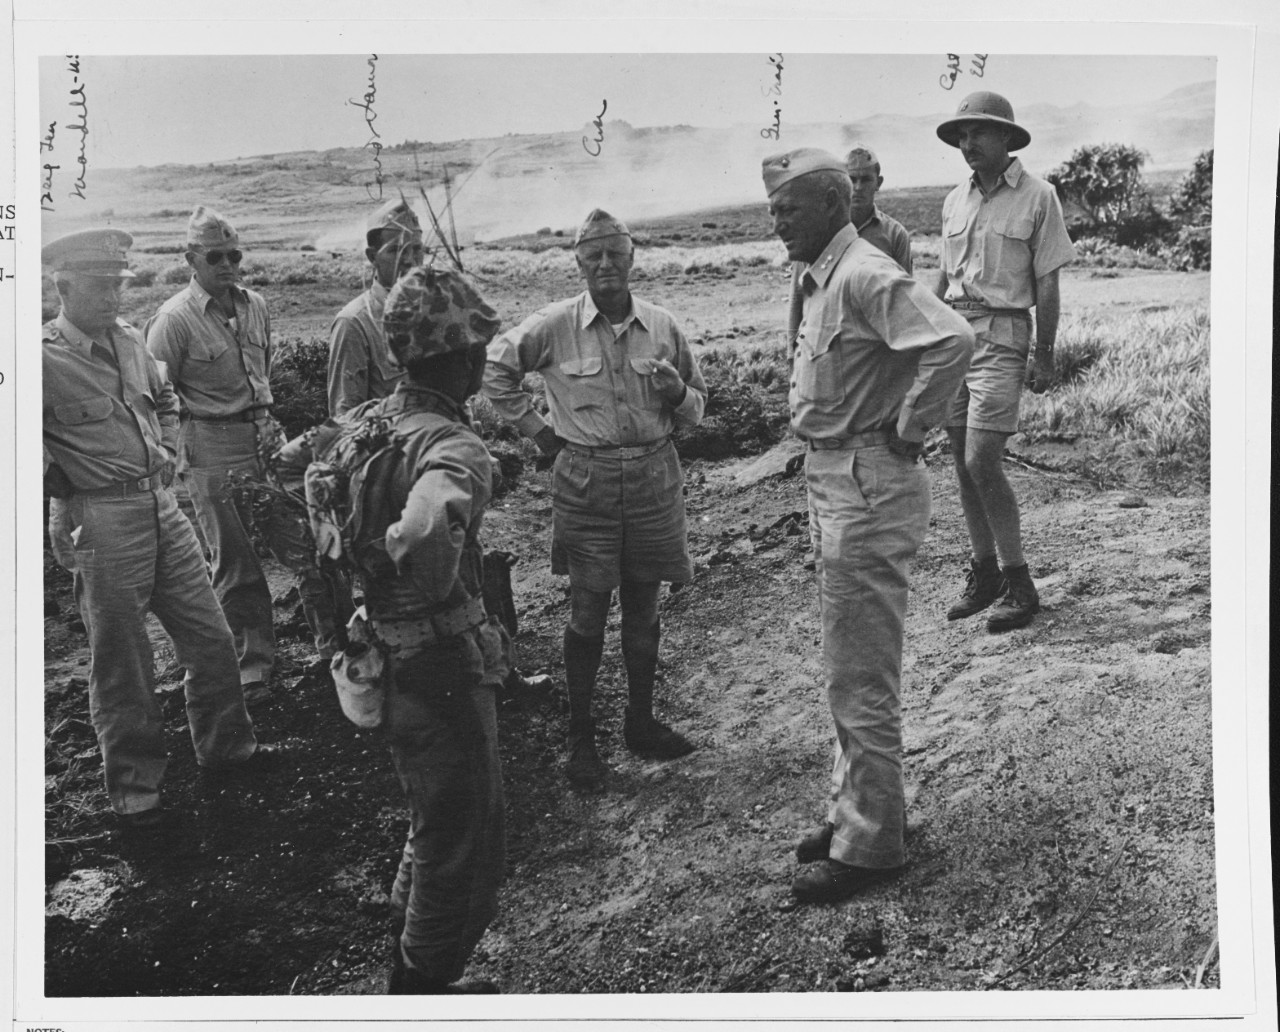 Fleet Admiral Chester W. Nimitz (CinCPac-POA) listens to a Marine explain his combat gear during World War II.